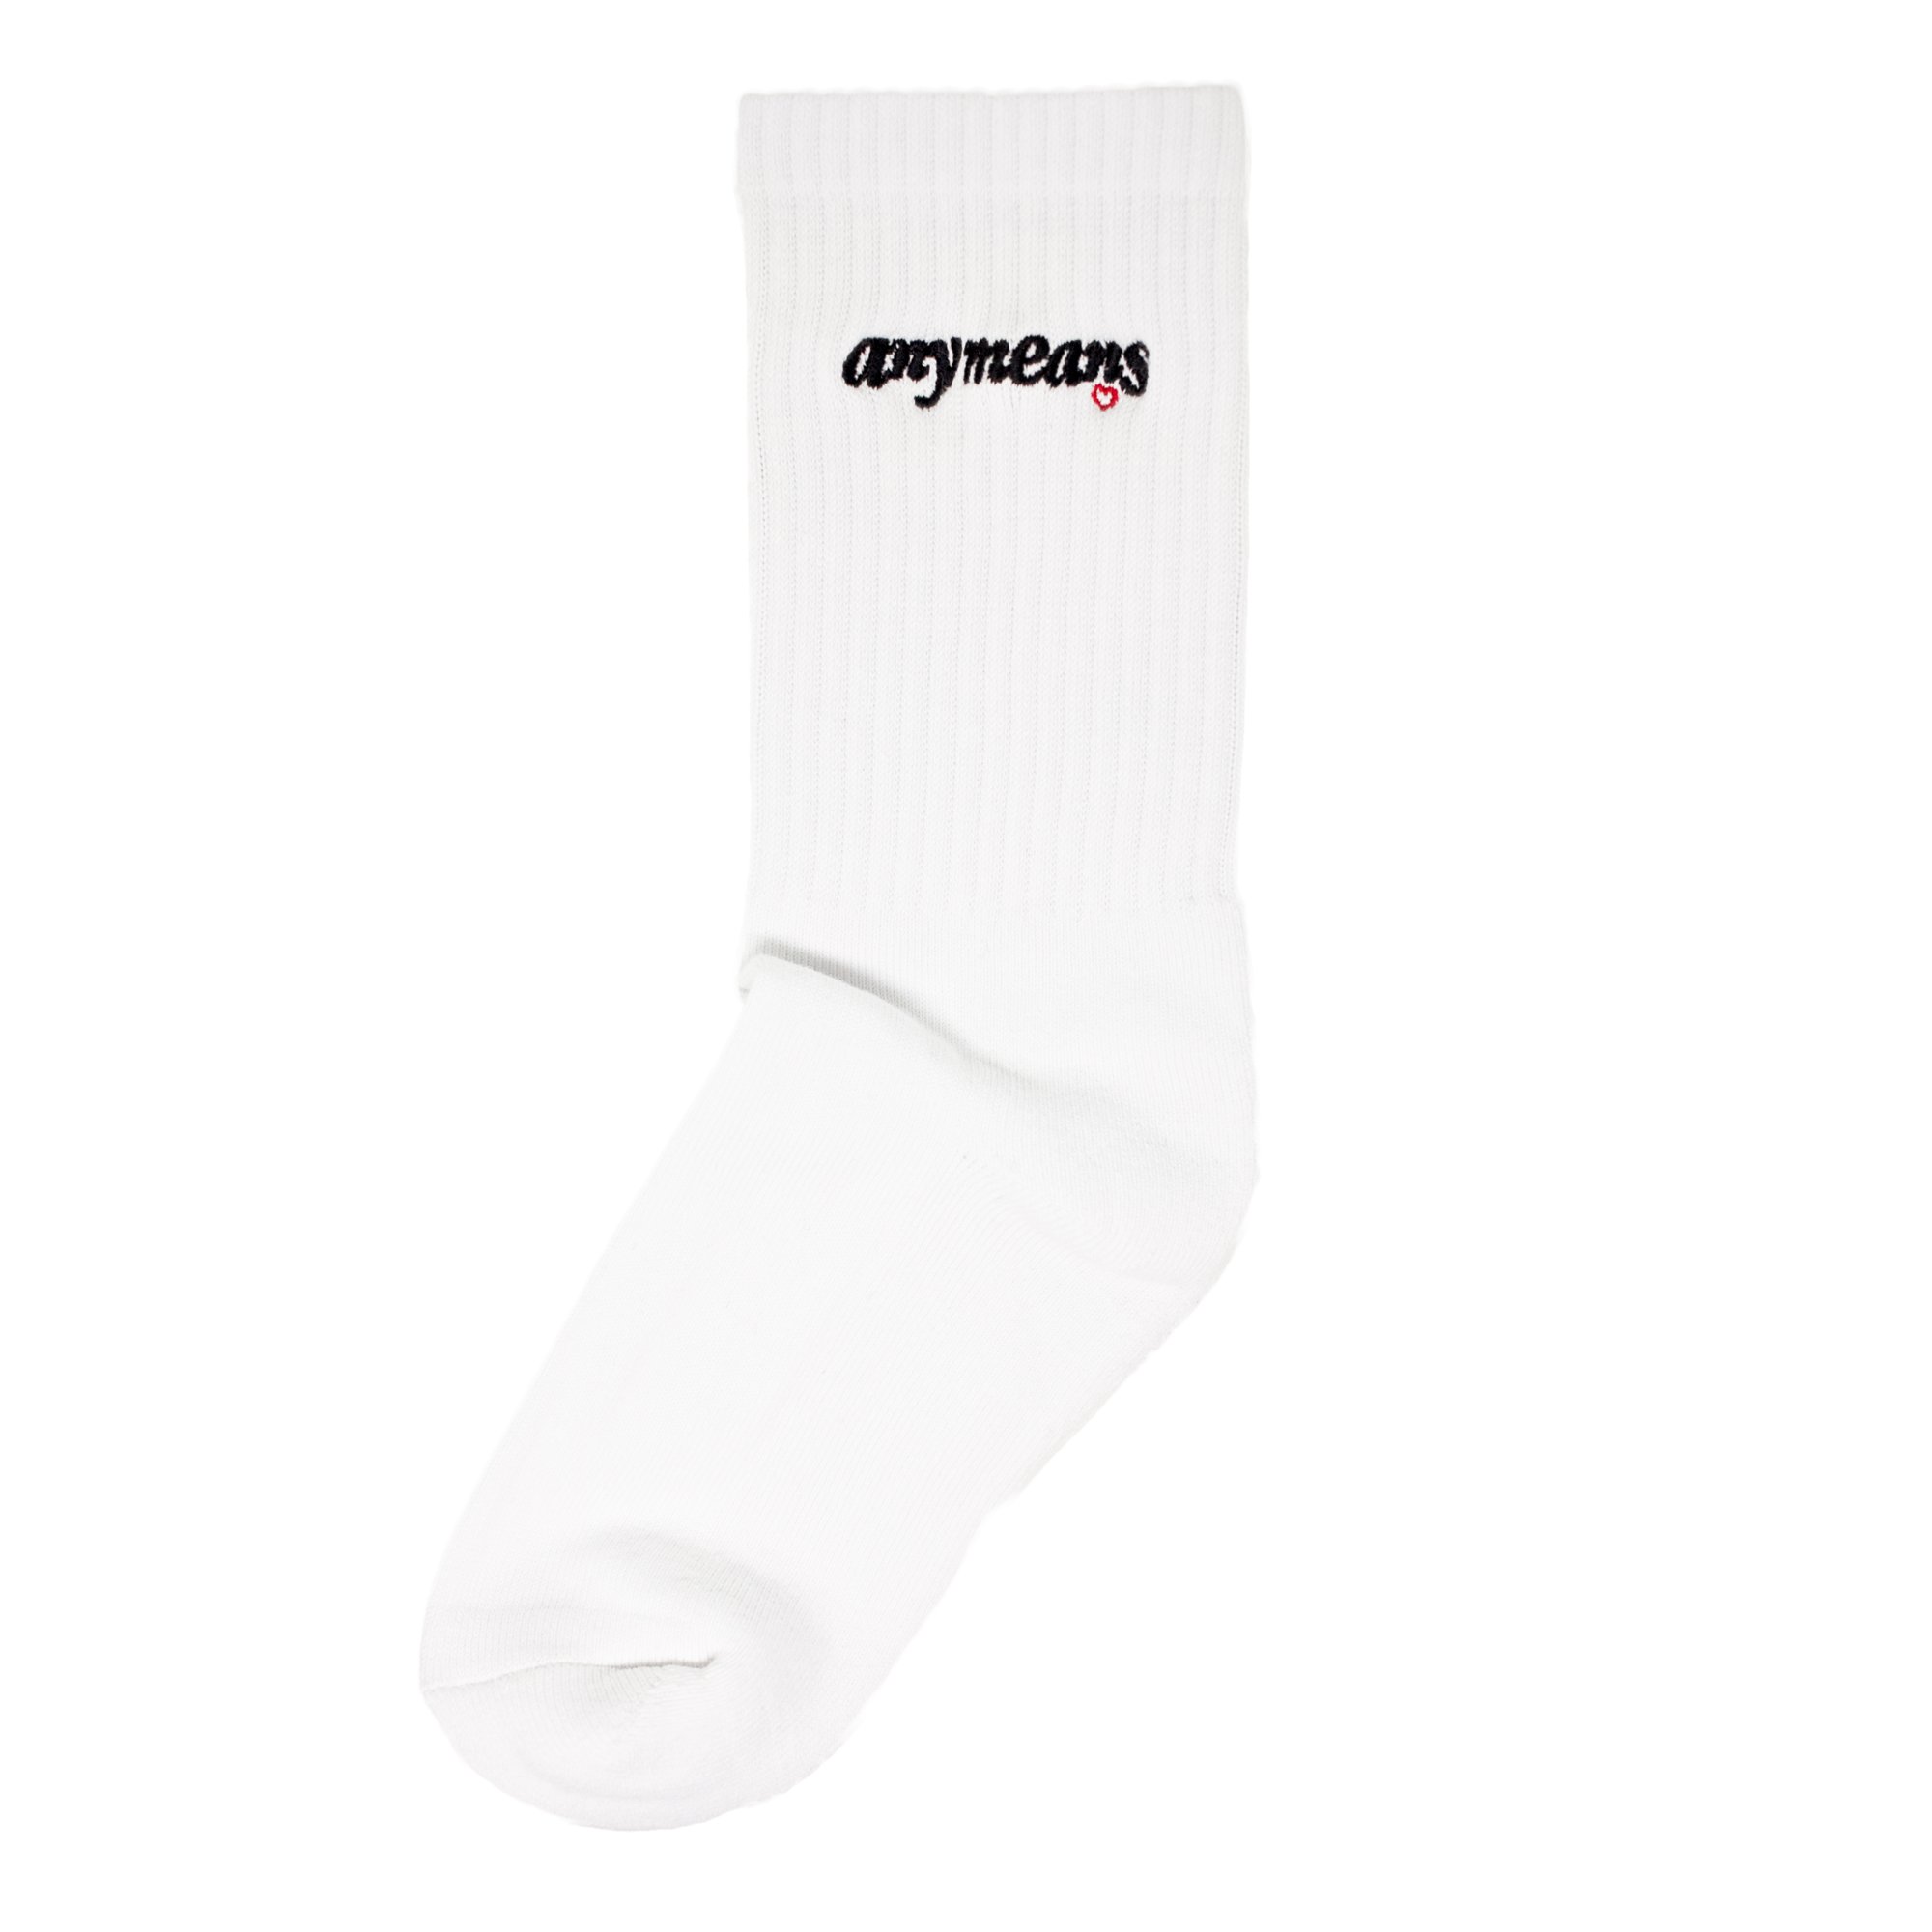 Lover Socks in White | Any Means